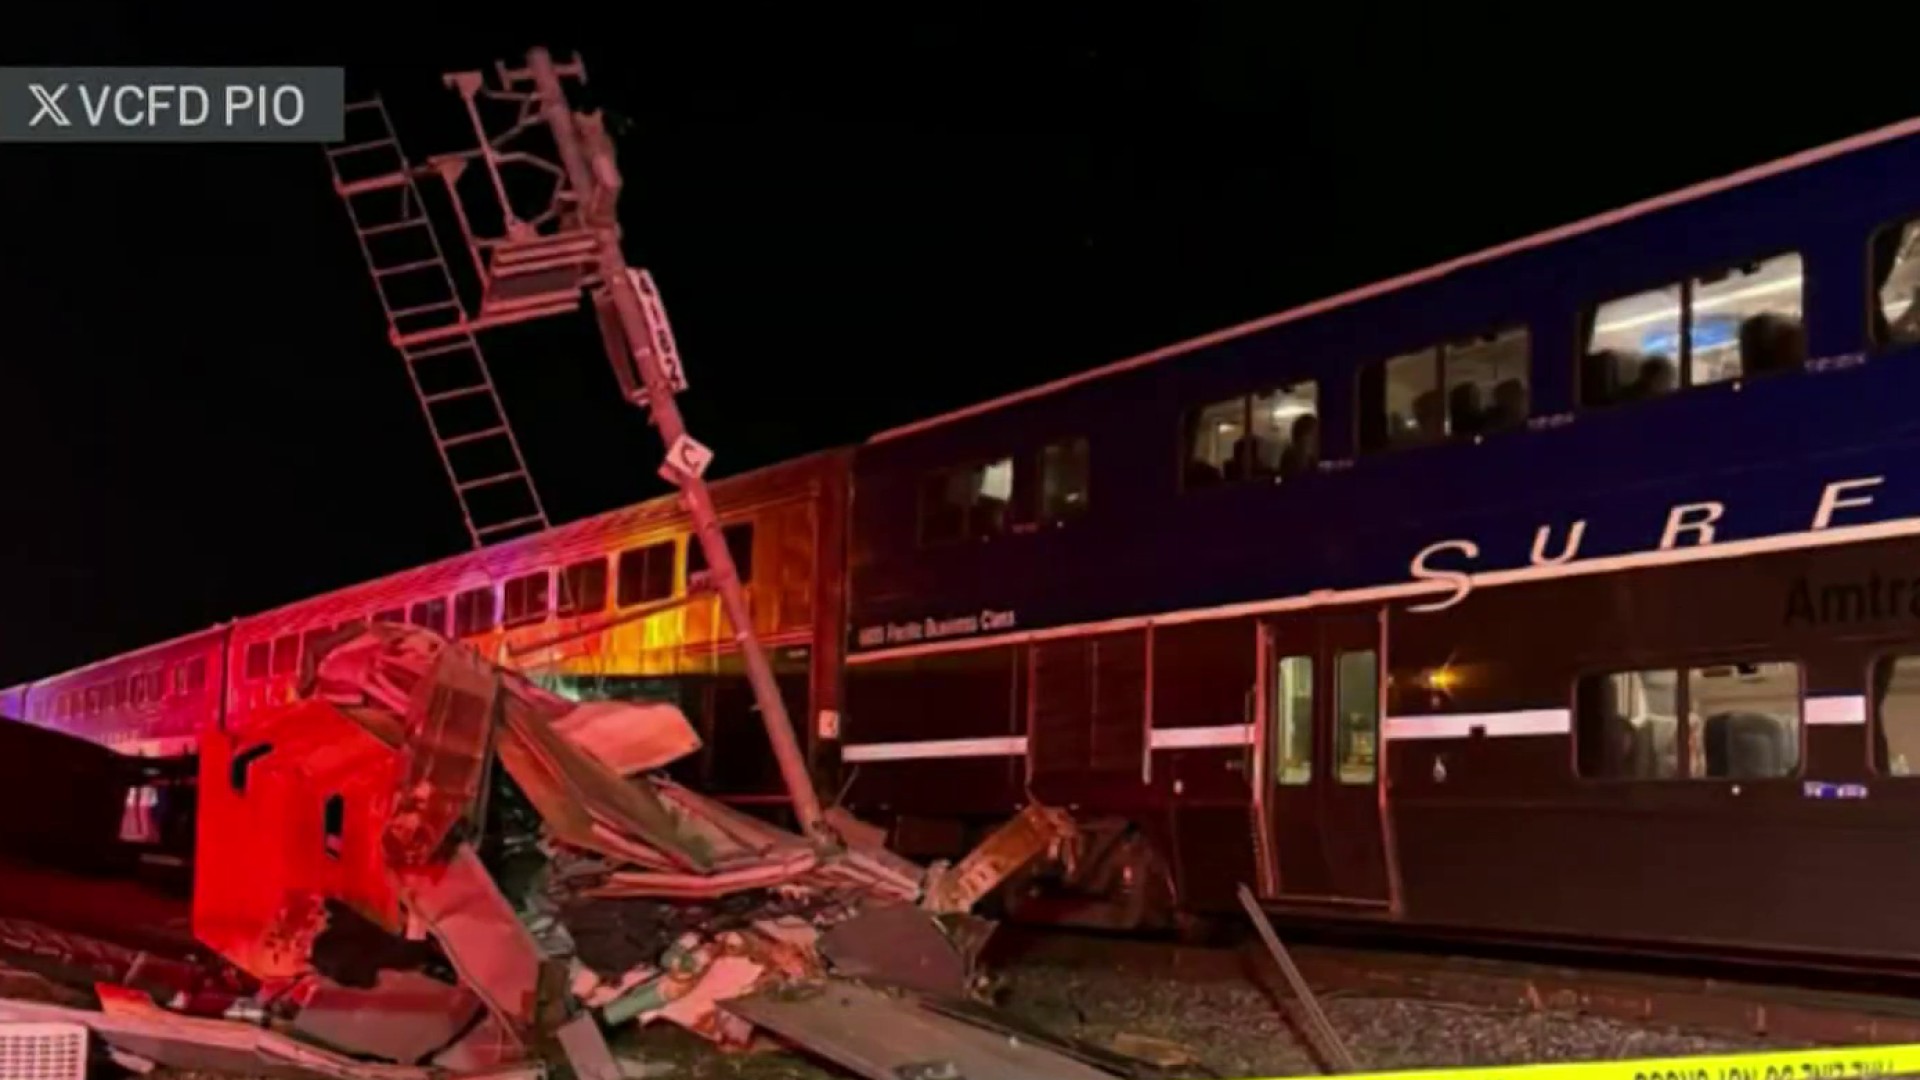 Five injured in Moorpark Amtrak train crash – NBC Los Angeles